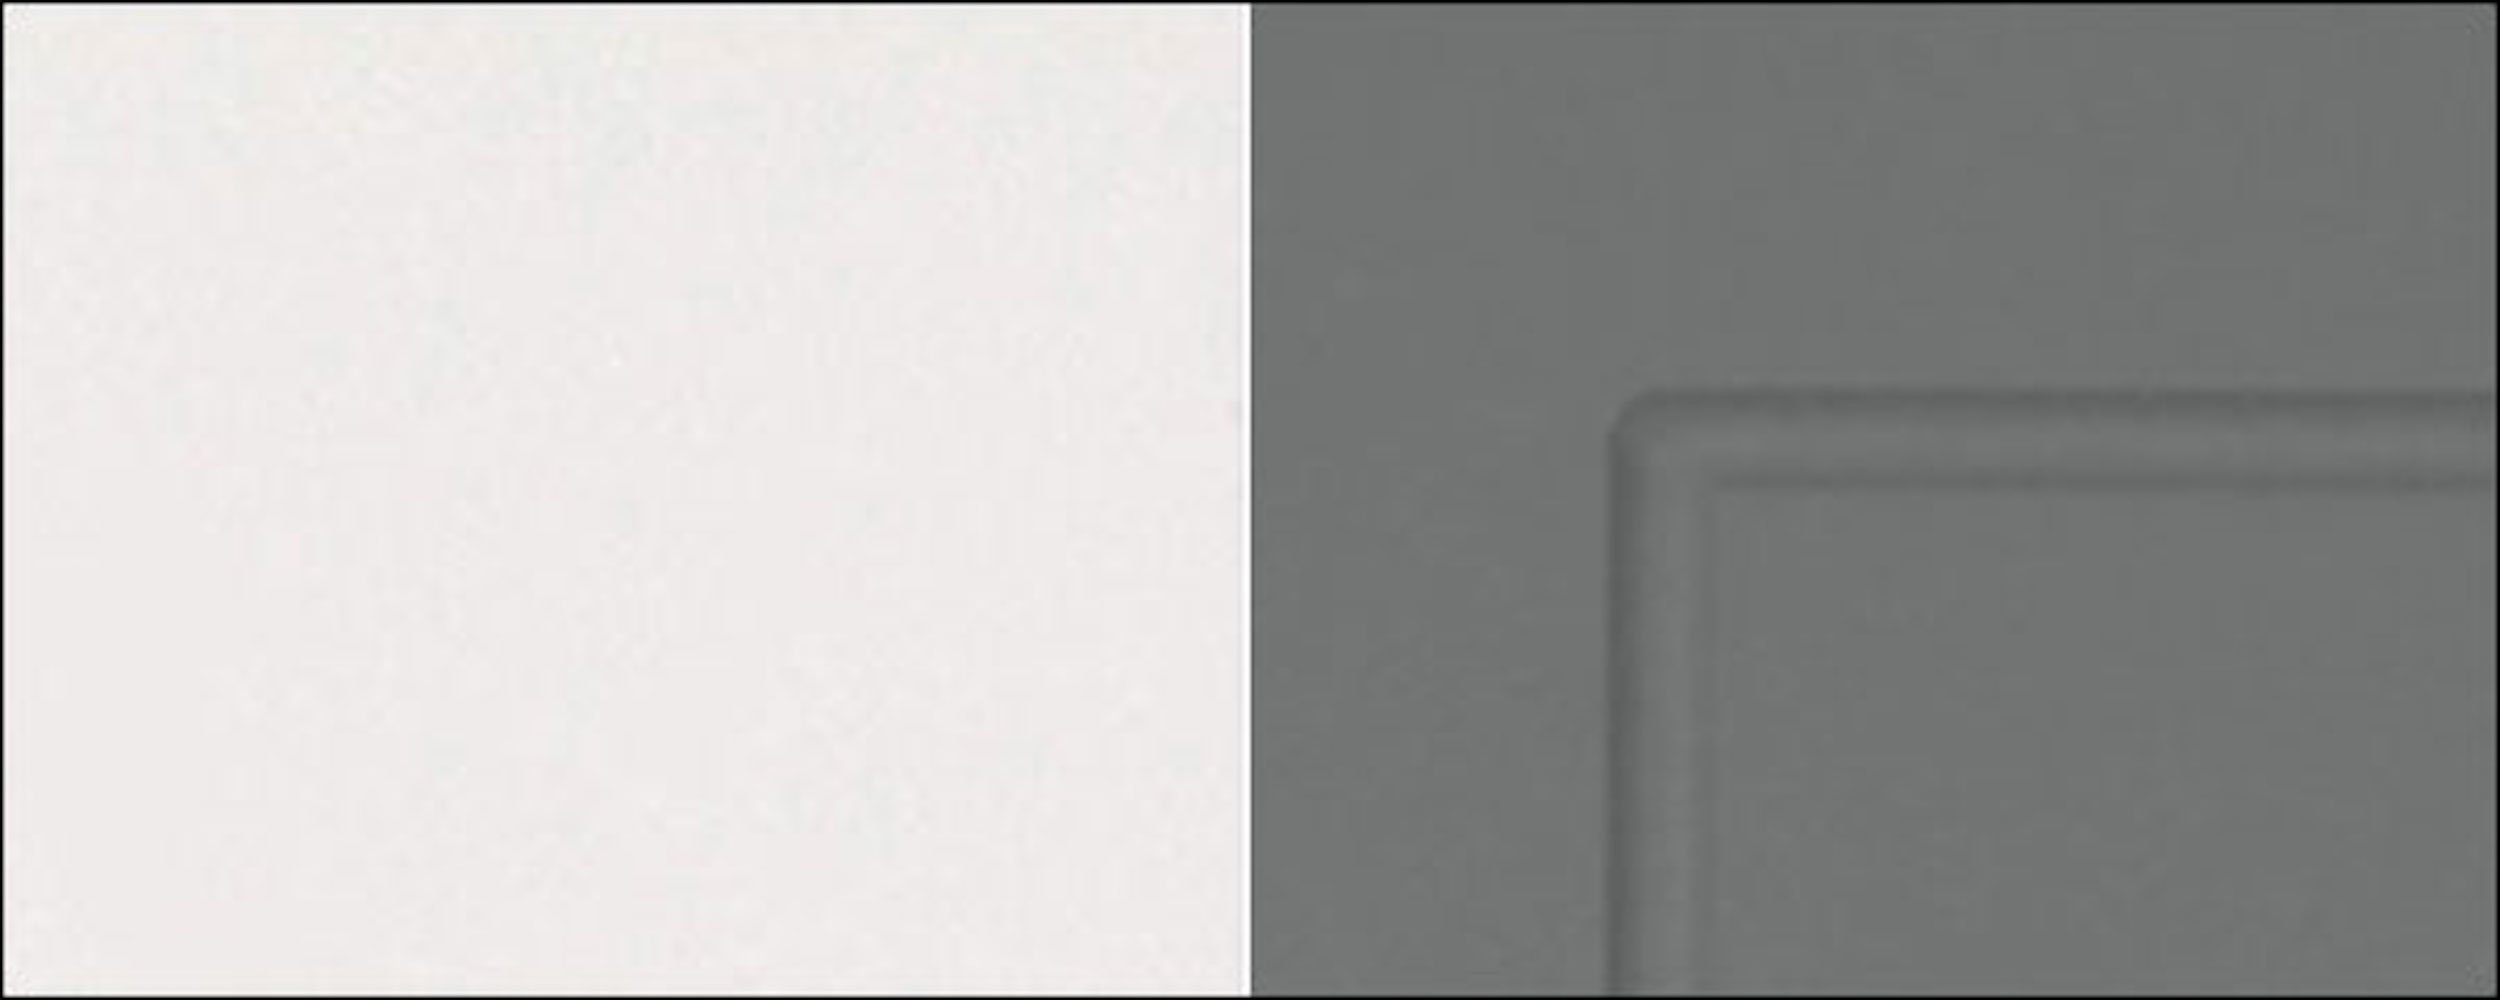 40cm und matt Klapphängeschrank (Kvantum) Feldmann-Wohnen wählbar grey Front- Korpusfarbe dust 1-türig Kvantum